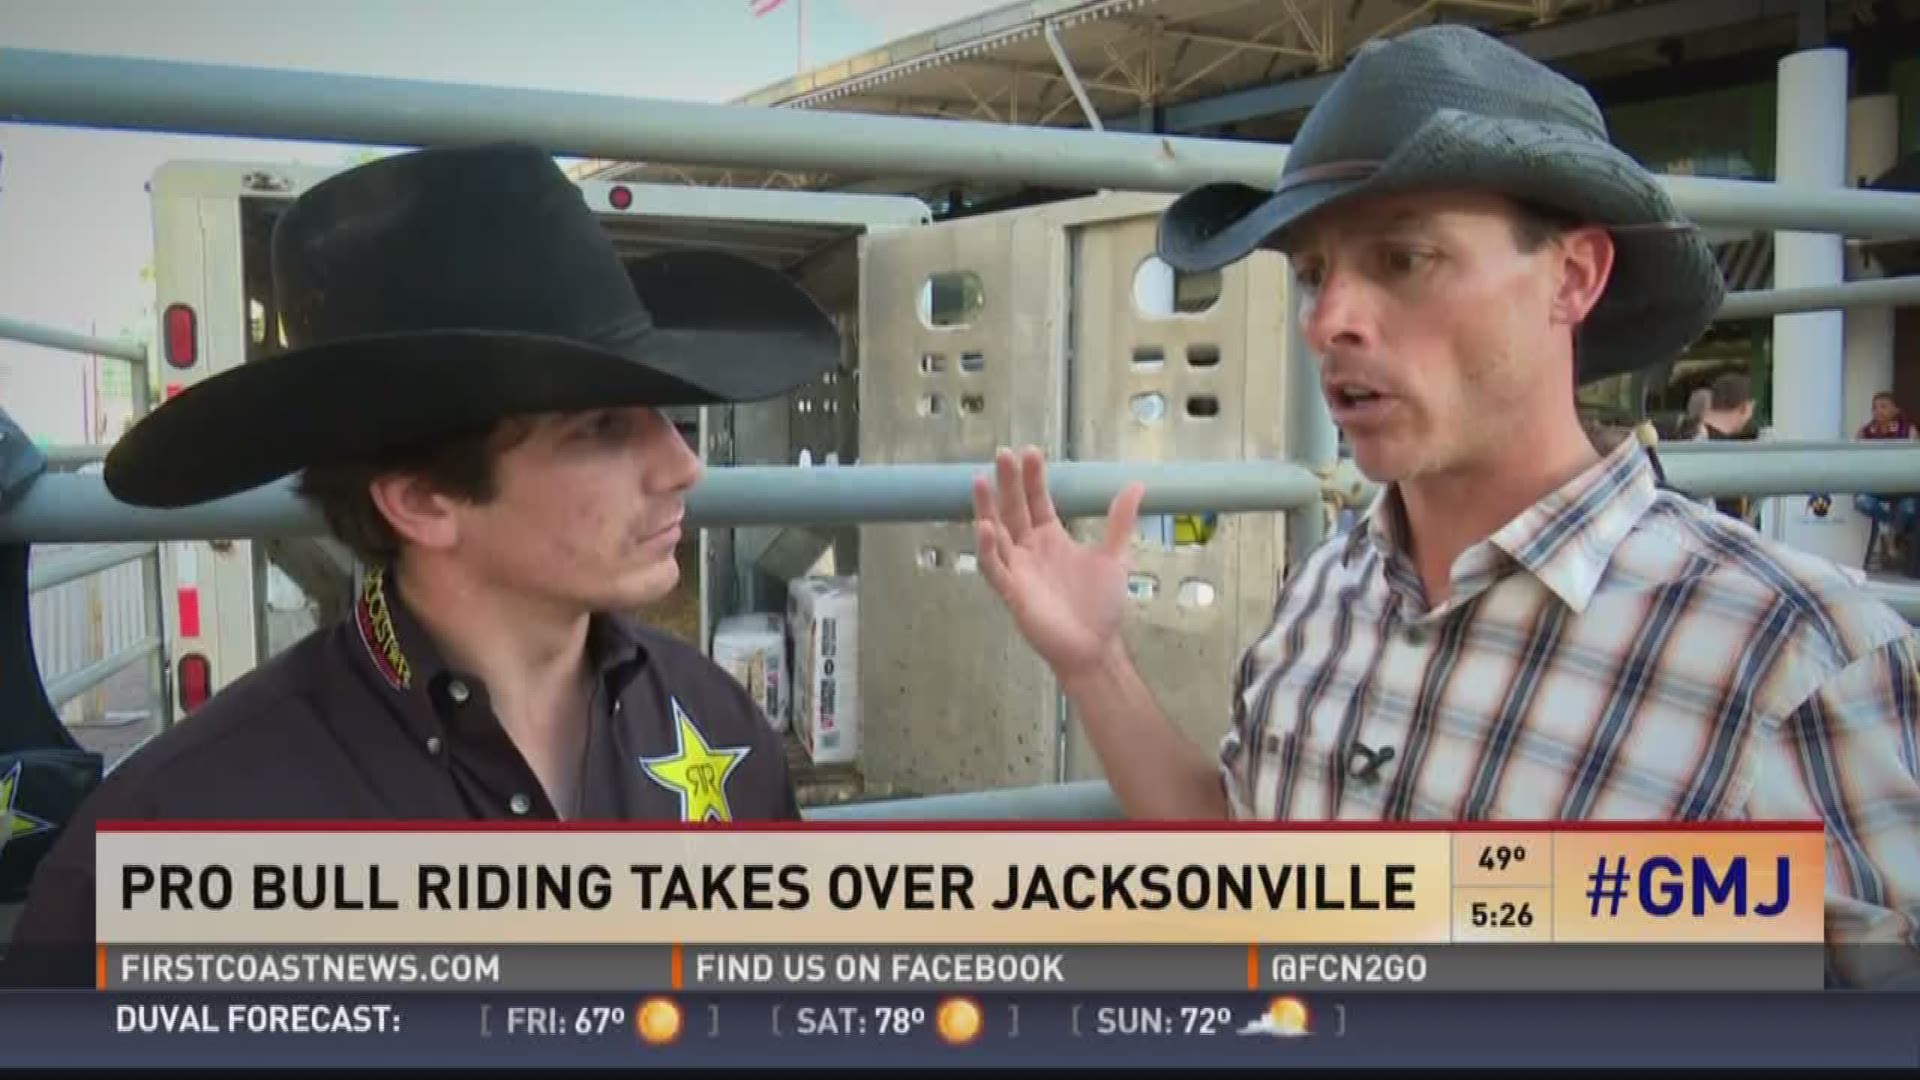 Pro Bull Riding takes over Jacksonville